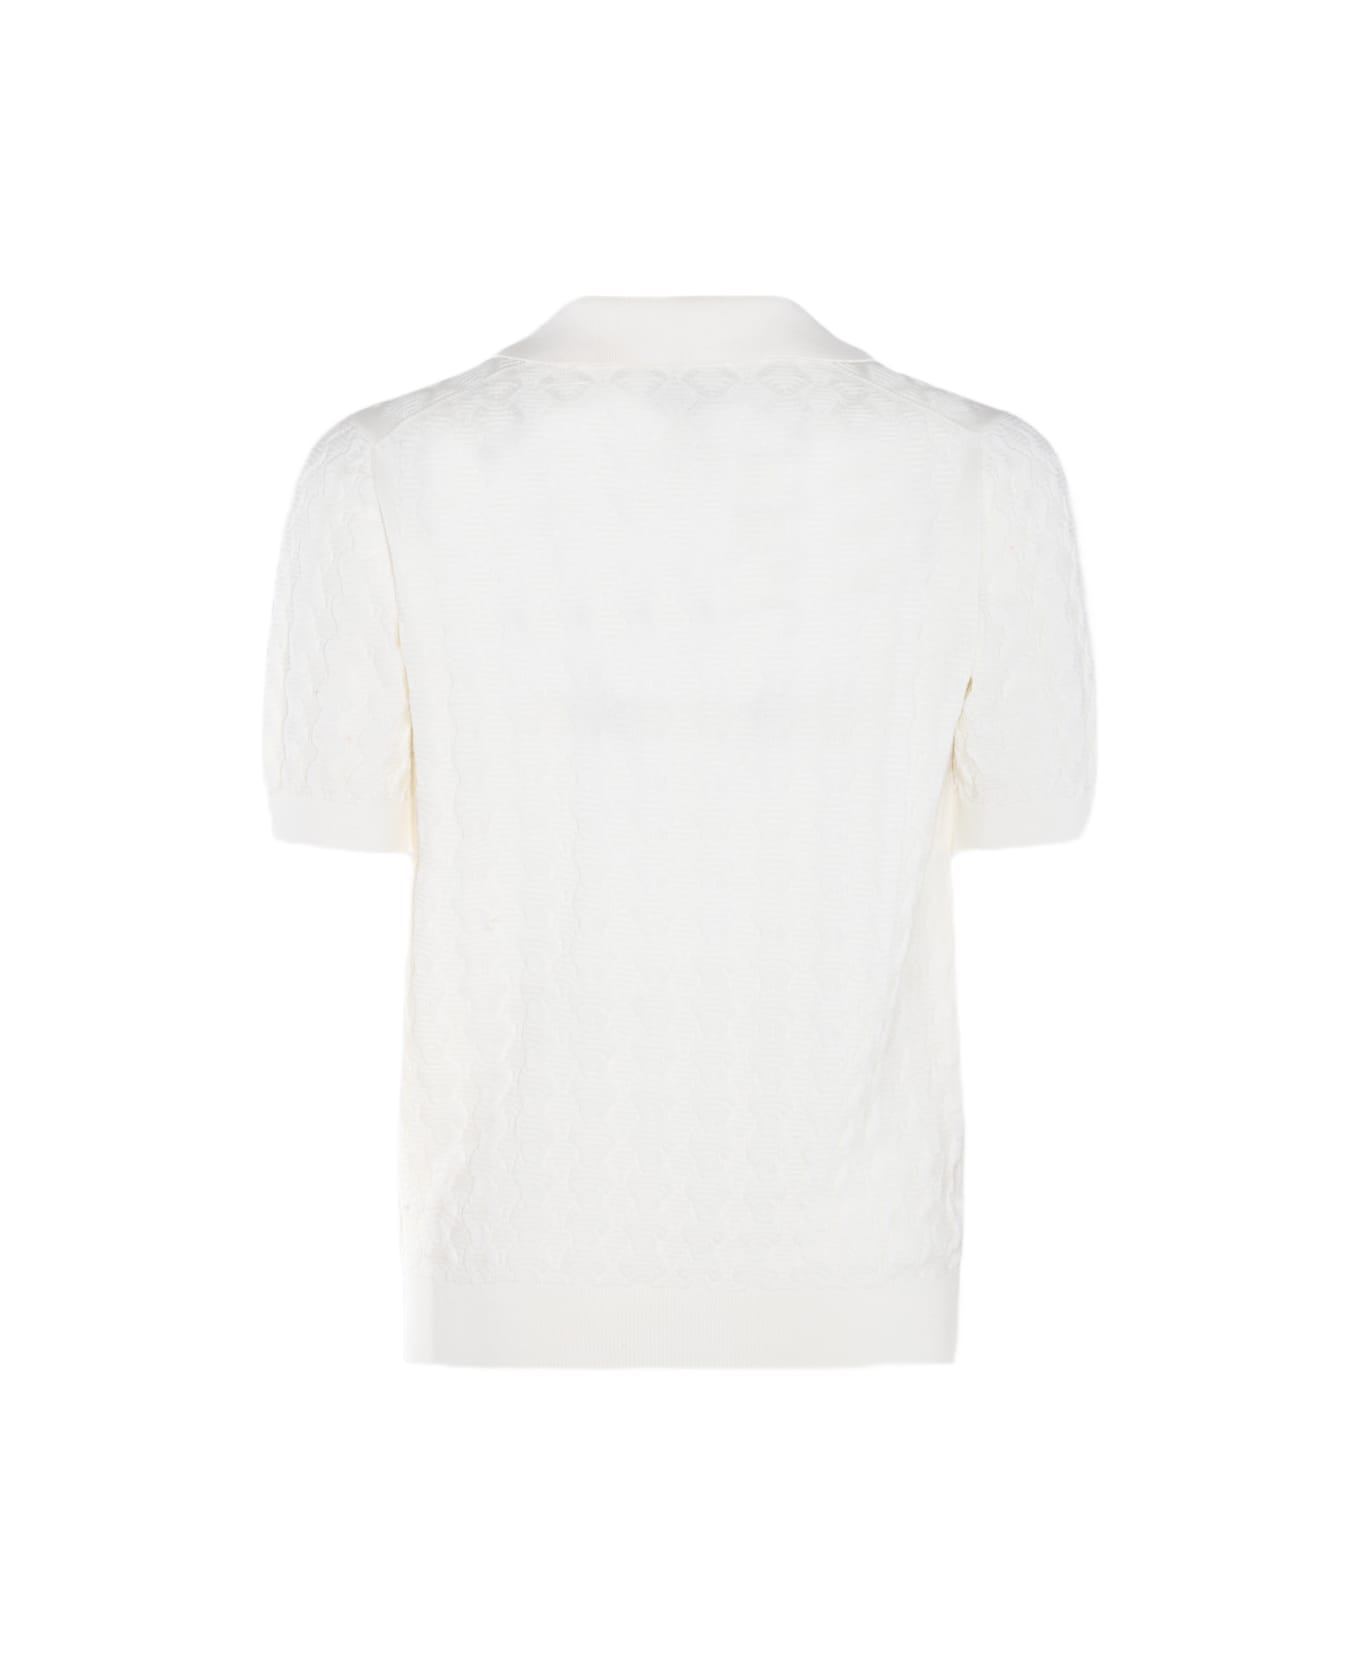 Piacenza Cashmere White Cotton Polo Shirt - White ポロシャツ